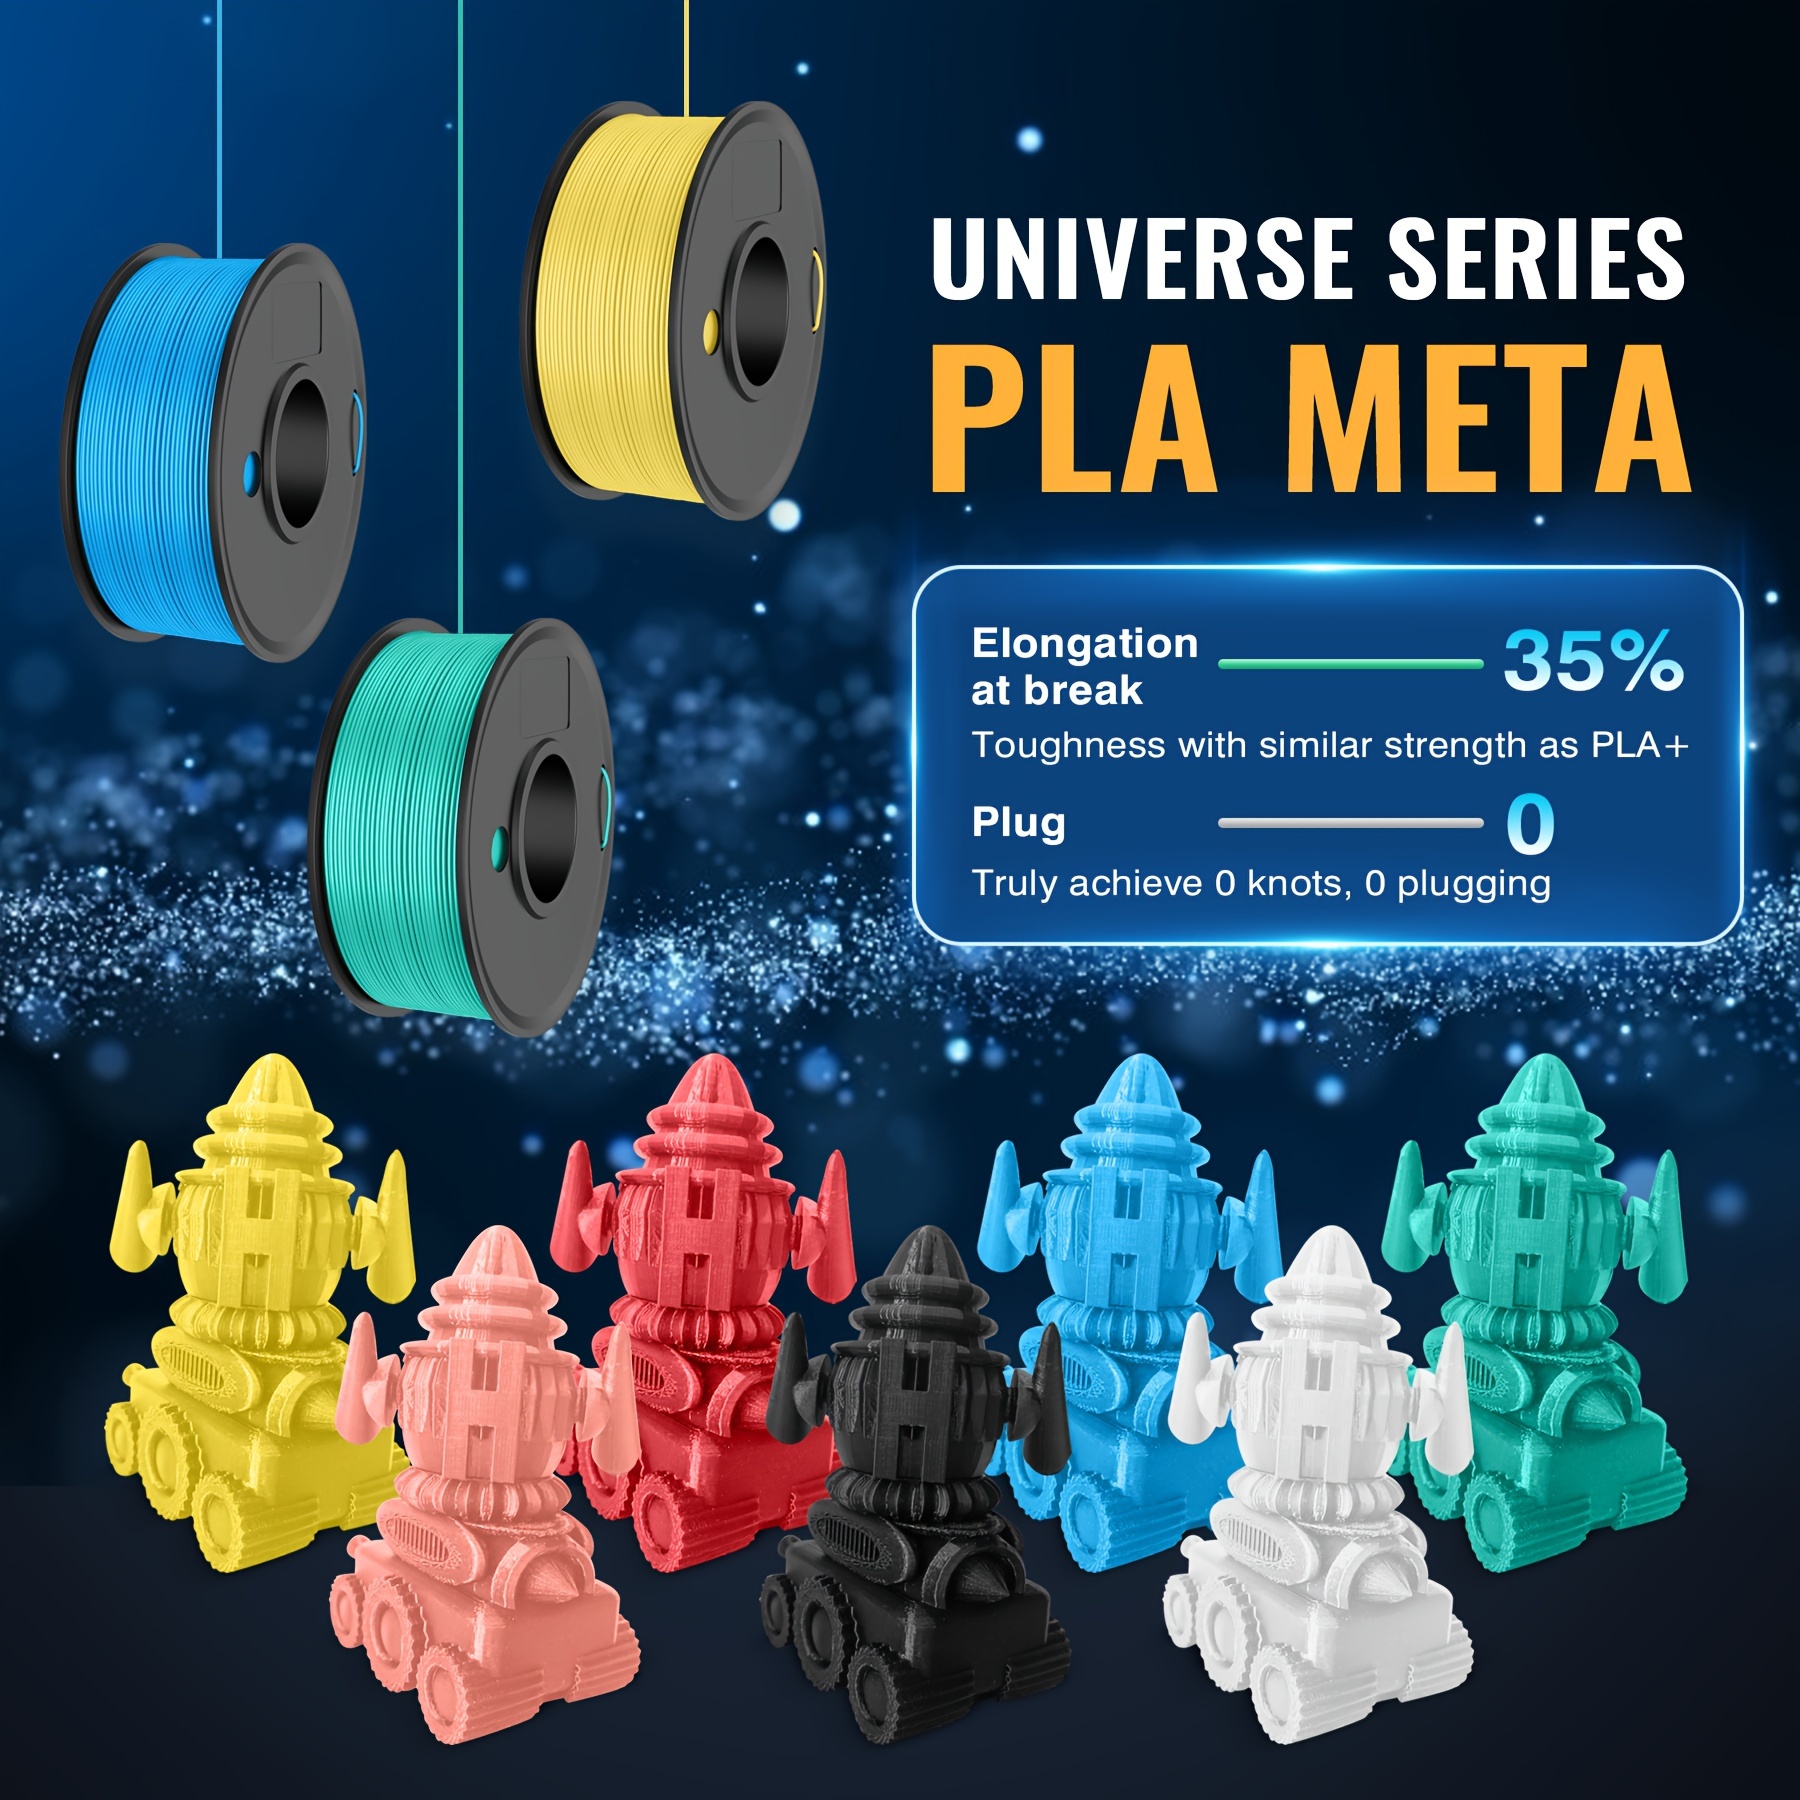 3D Printer Filament PLA Meta 1.75mm, SUNLU Neatly Wound PLA